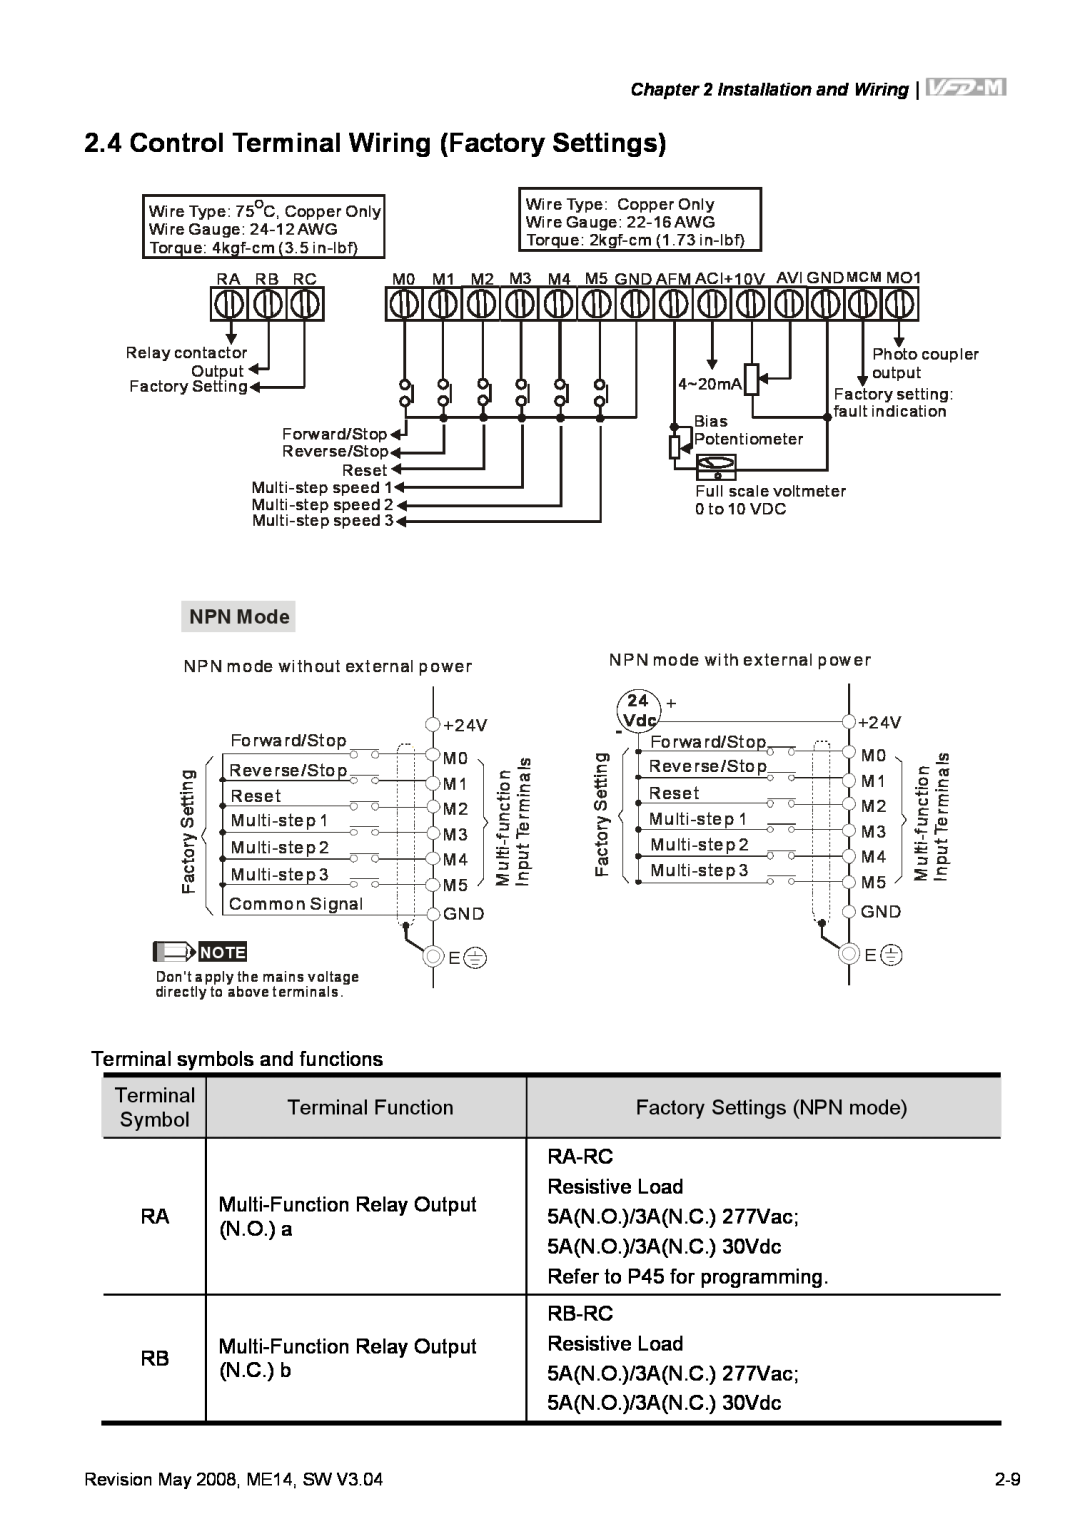 Delta Electronics VFD-M manual Control Terminal Wiring Factory Settings, NPN Mode, 24 + 